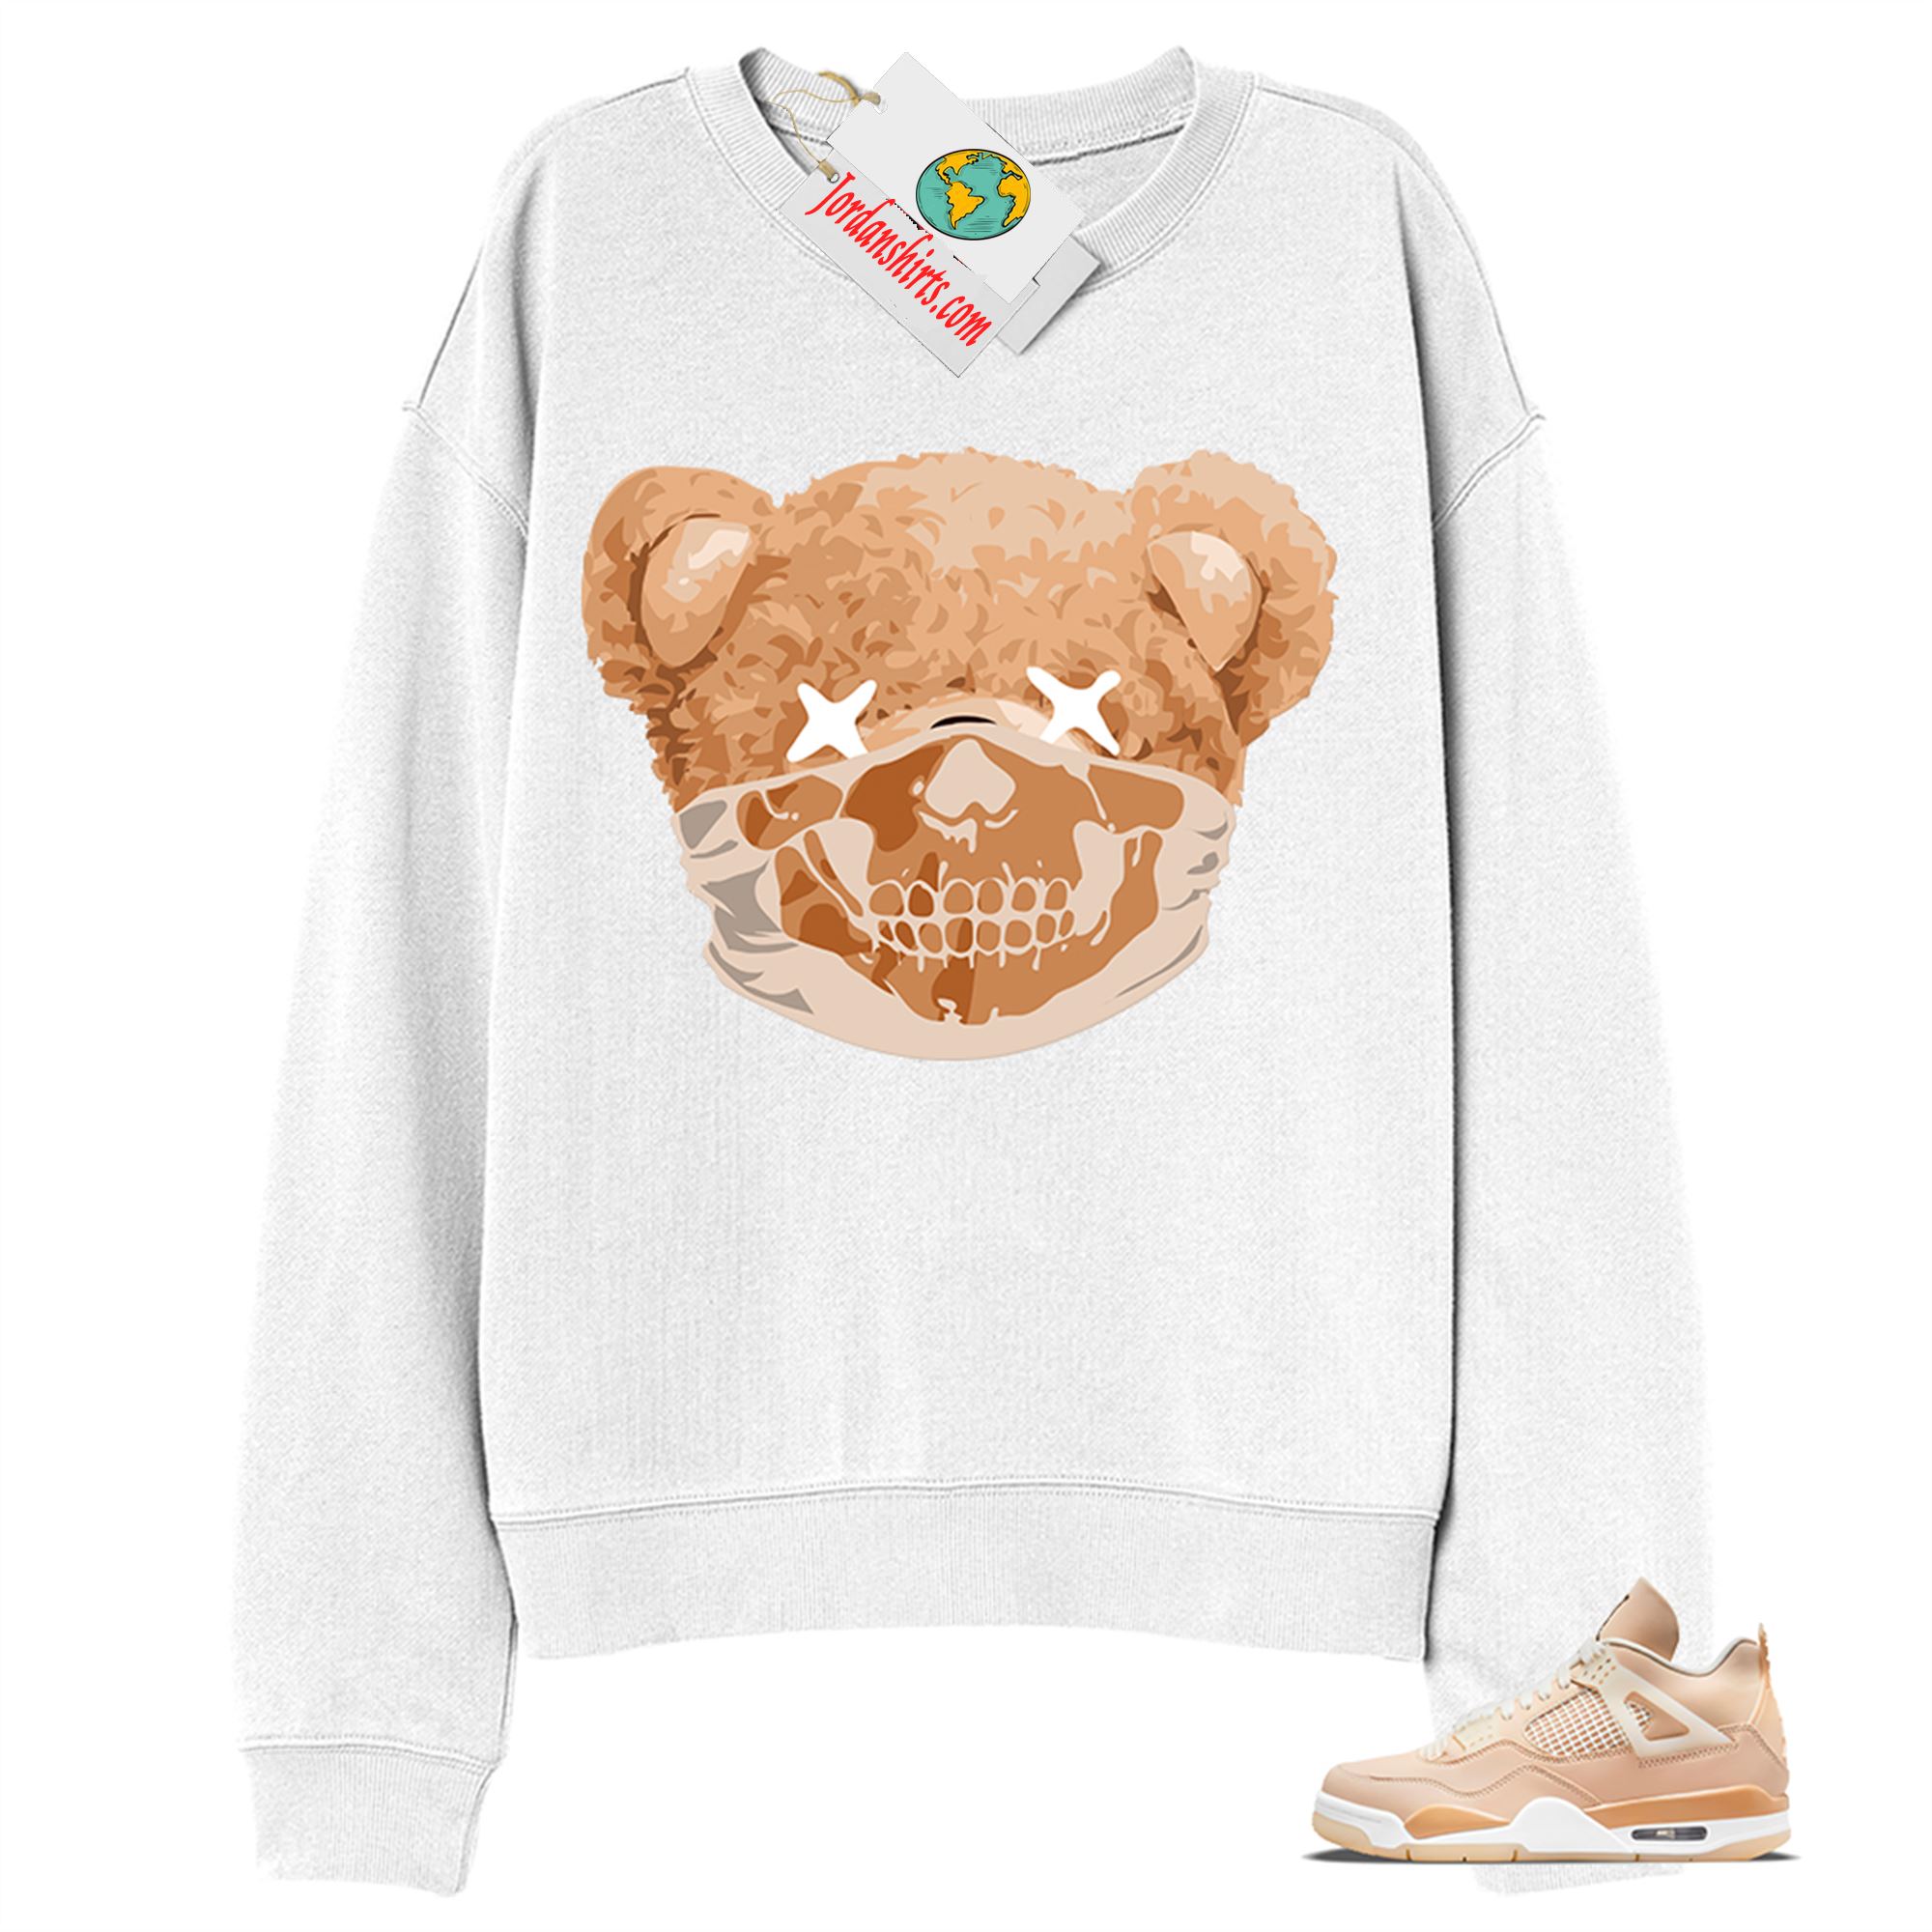 Jordan 4 Sweatshirt, Teddy Bear Skull Bandana White Sweatshirt Air Jordan 4 Shimmer 4s Full Size Up To 5xl